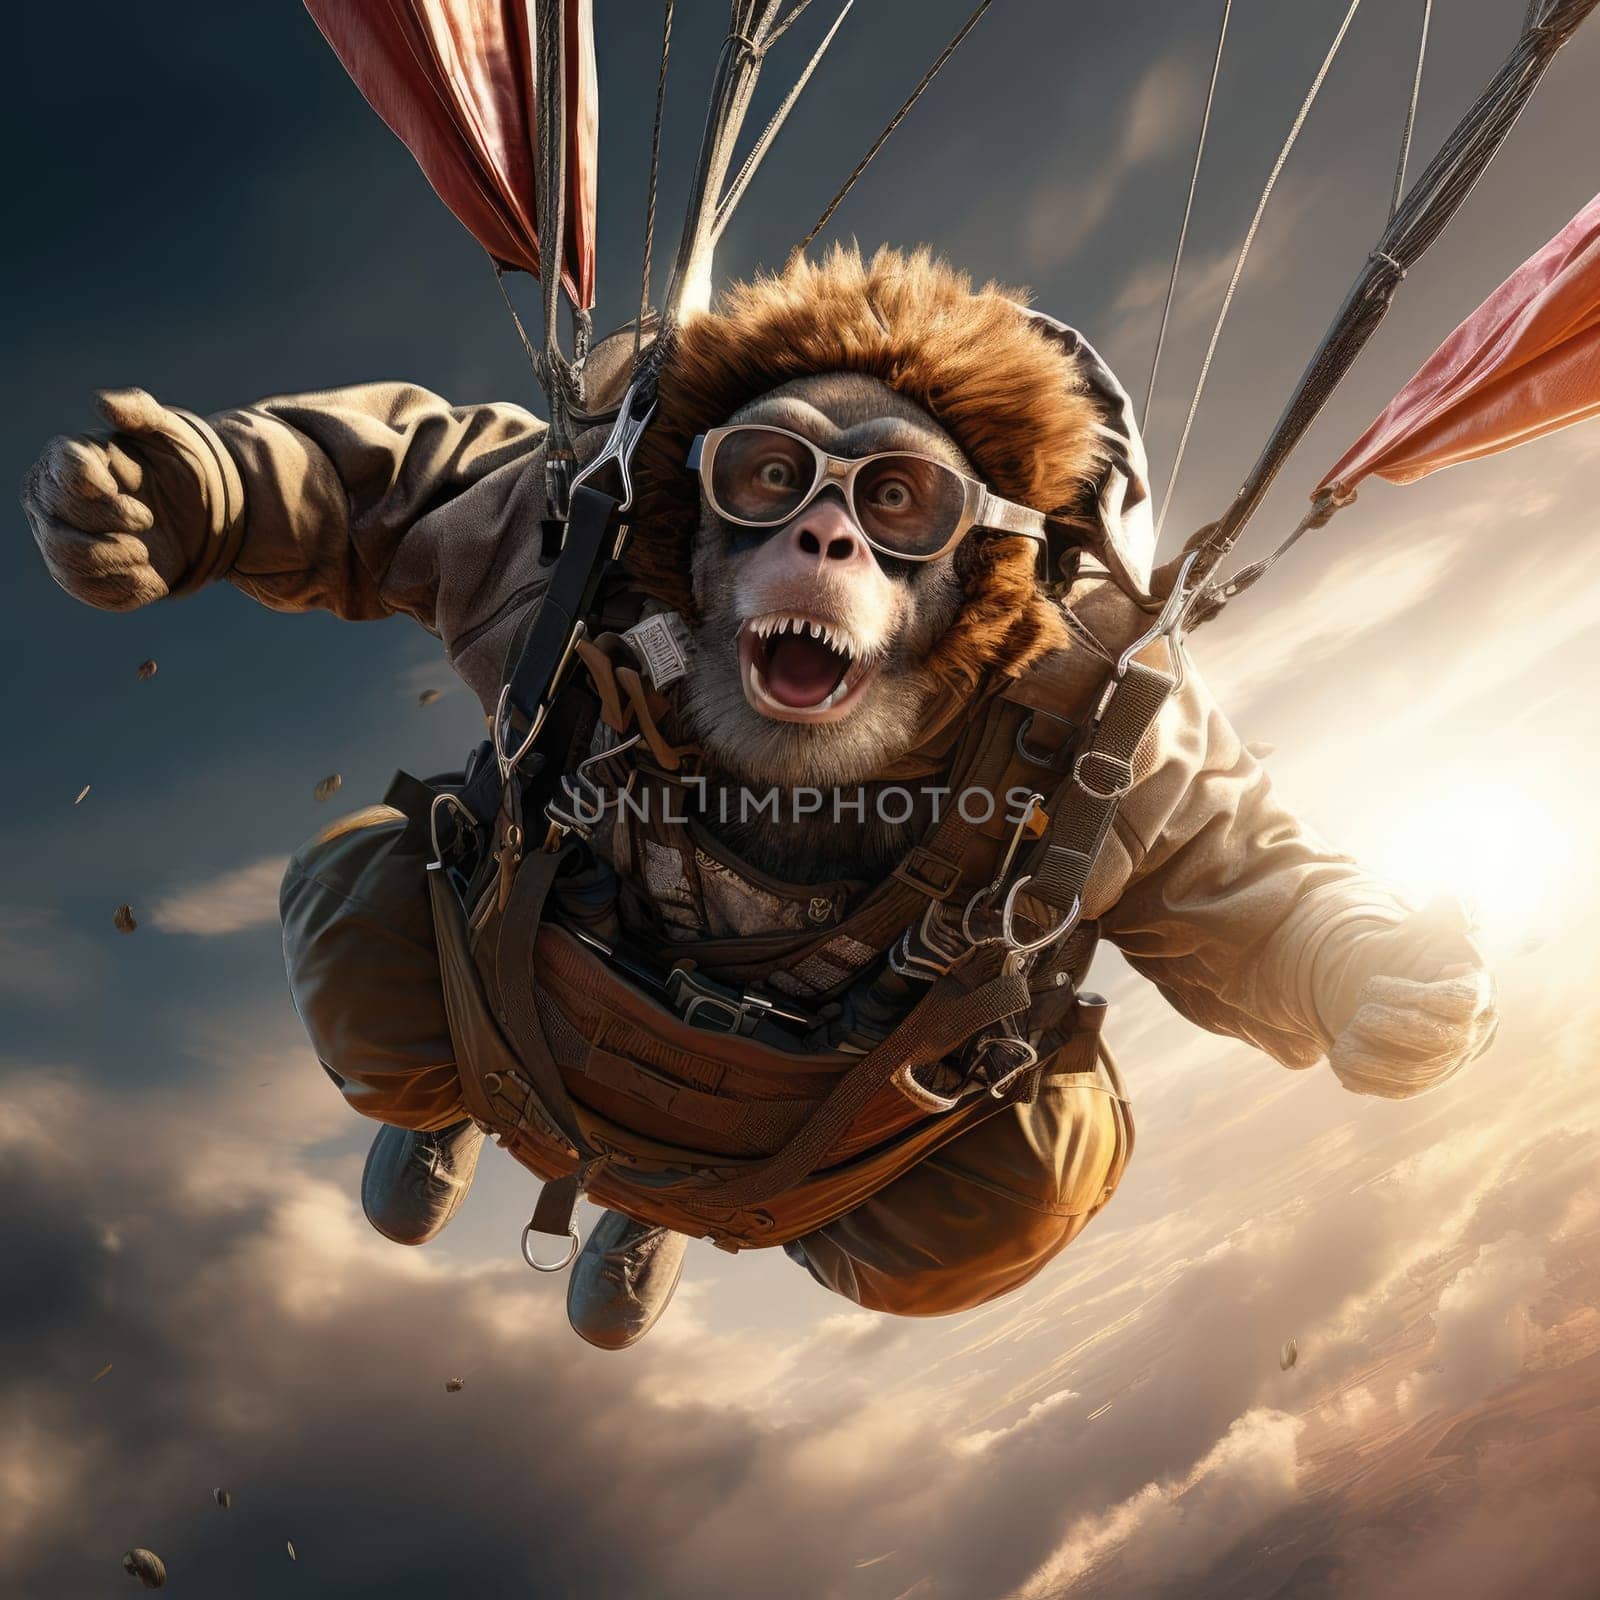 Monkey flying by parachute by cherezoff